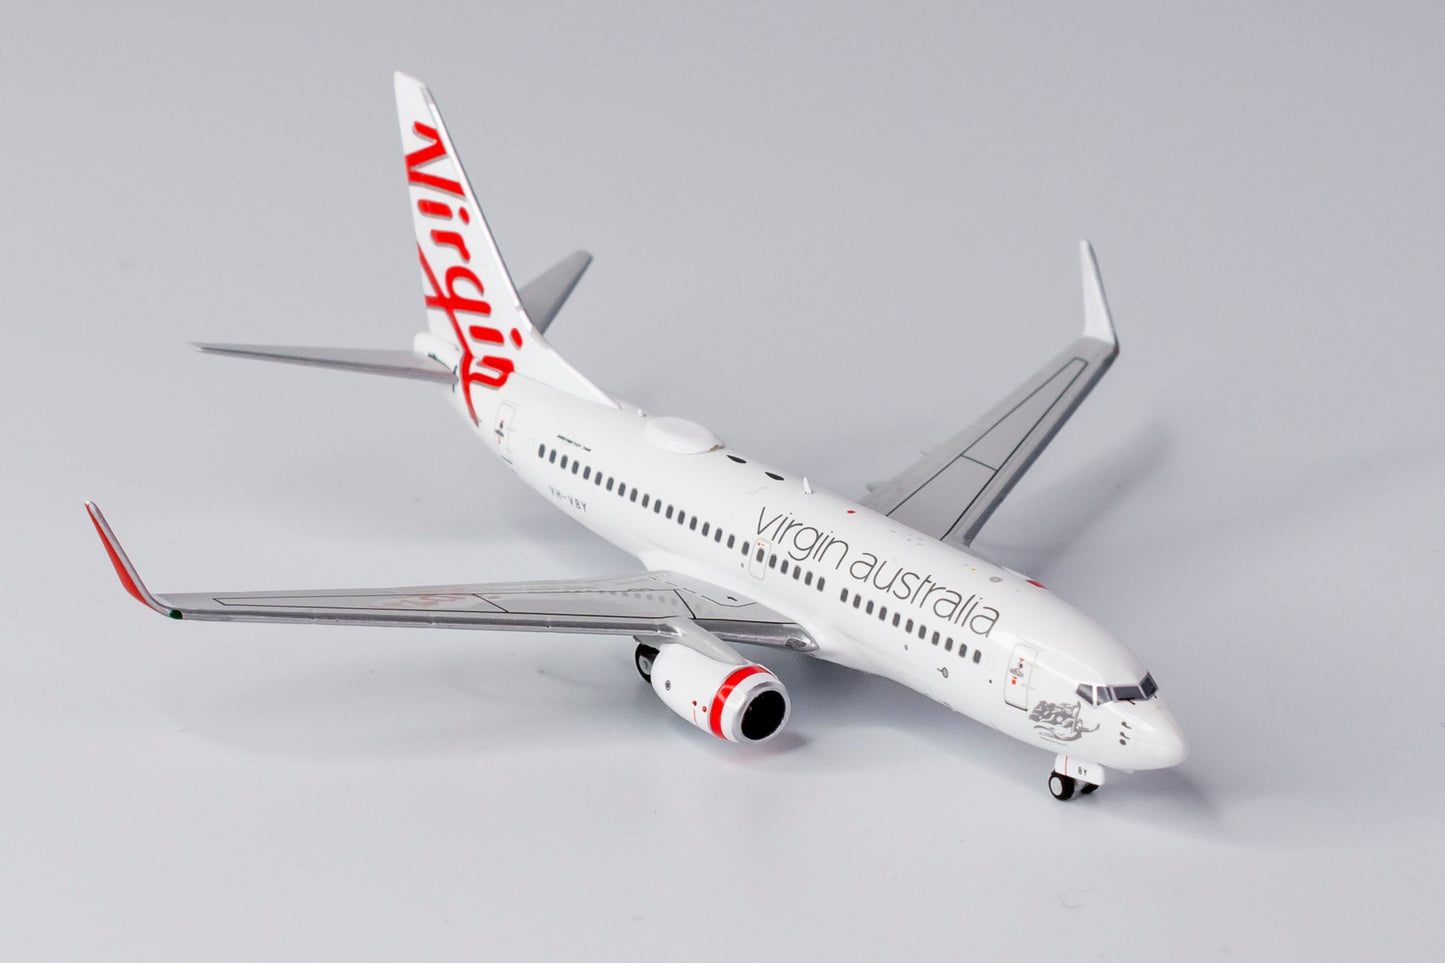 1/400 Virgin Australia Airlines B 737-700/w "Kingston Beach" NG Models 77009